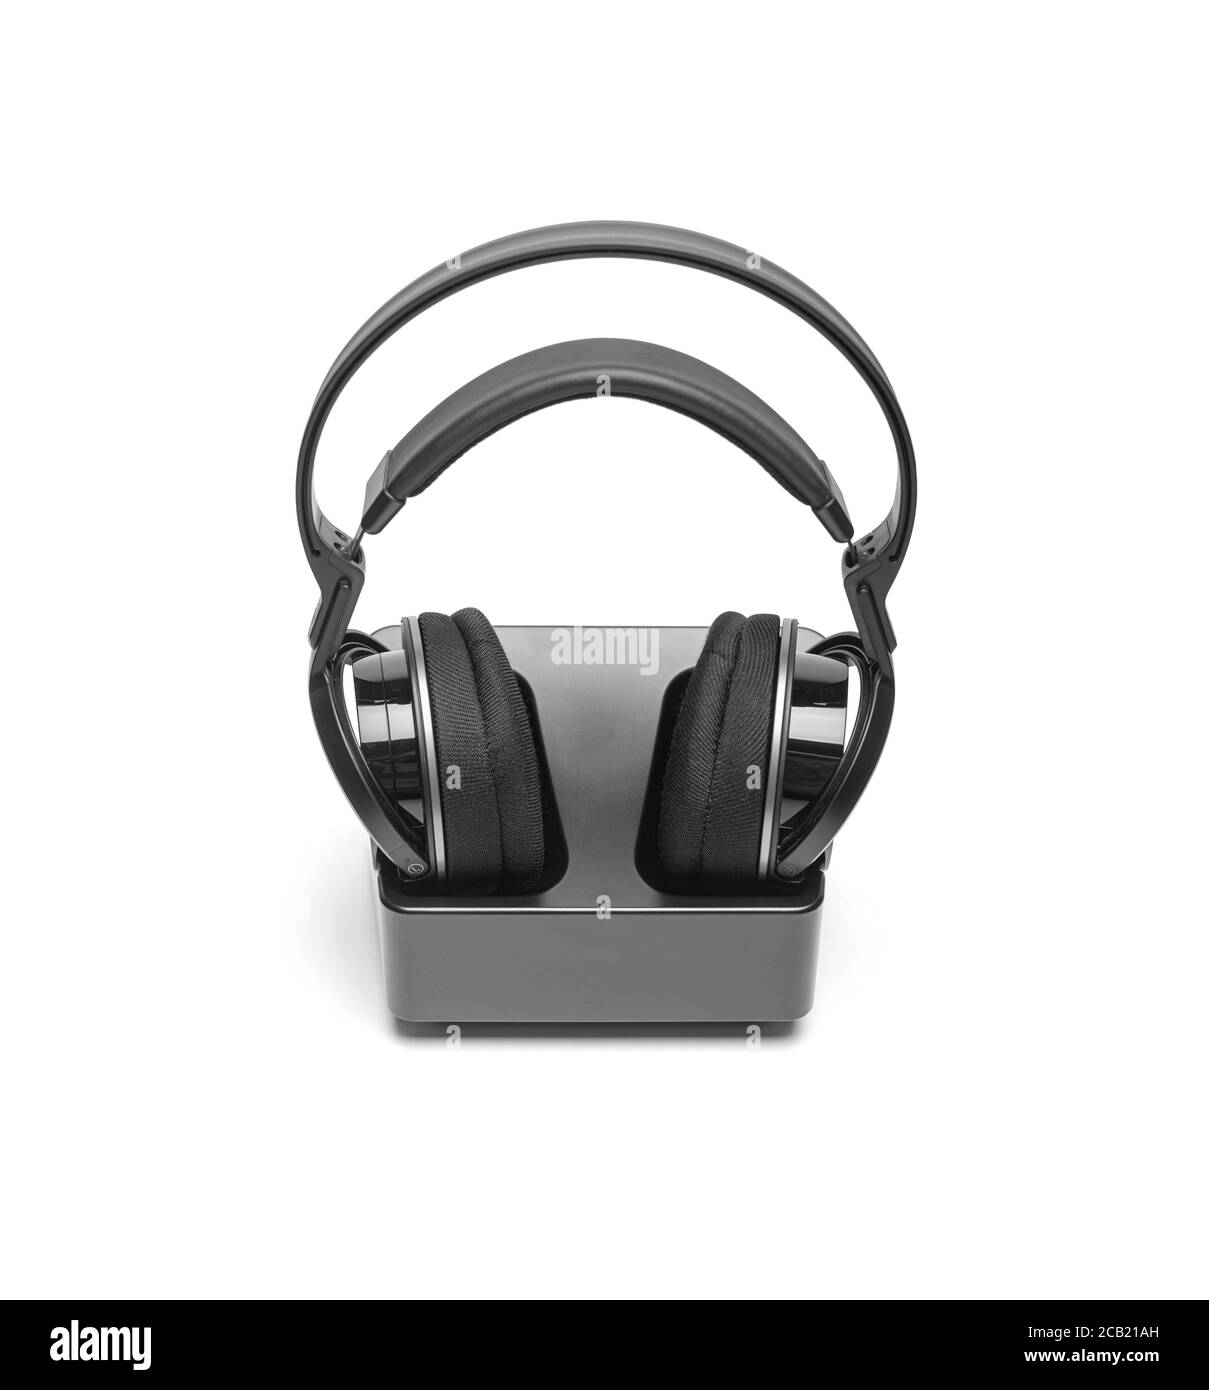 Wireless headphones on white background Stock Photo